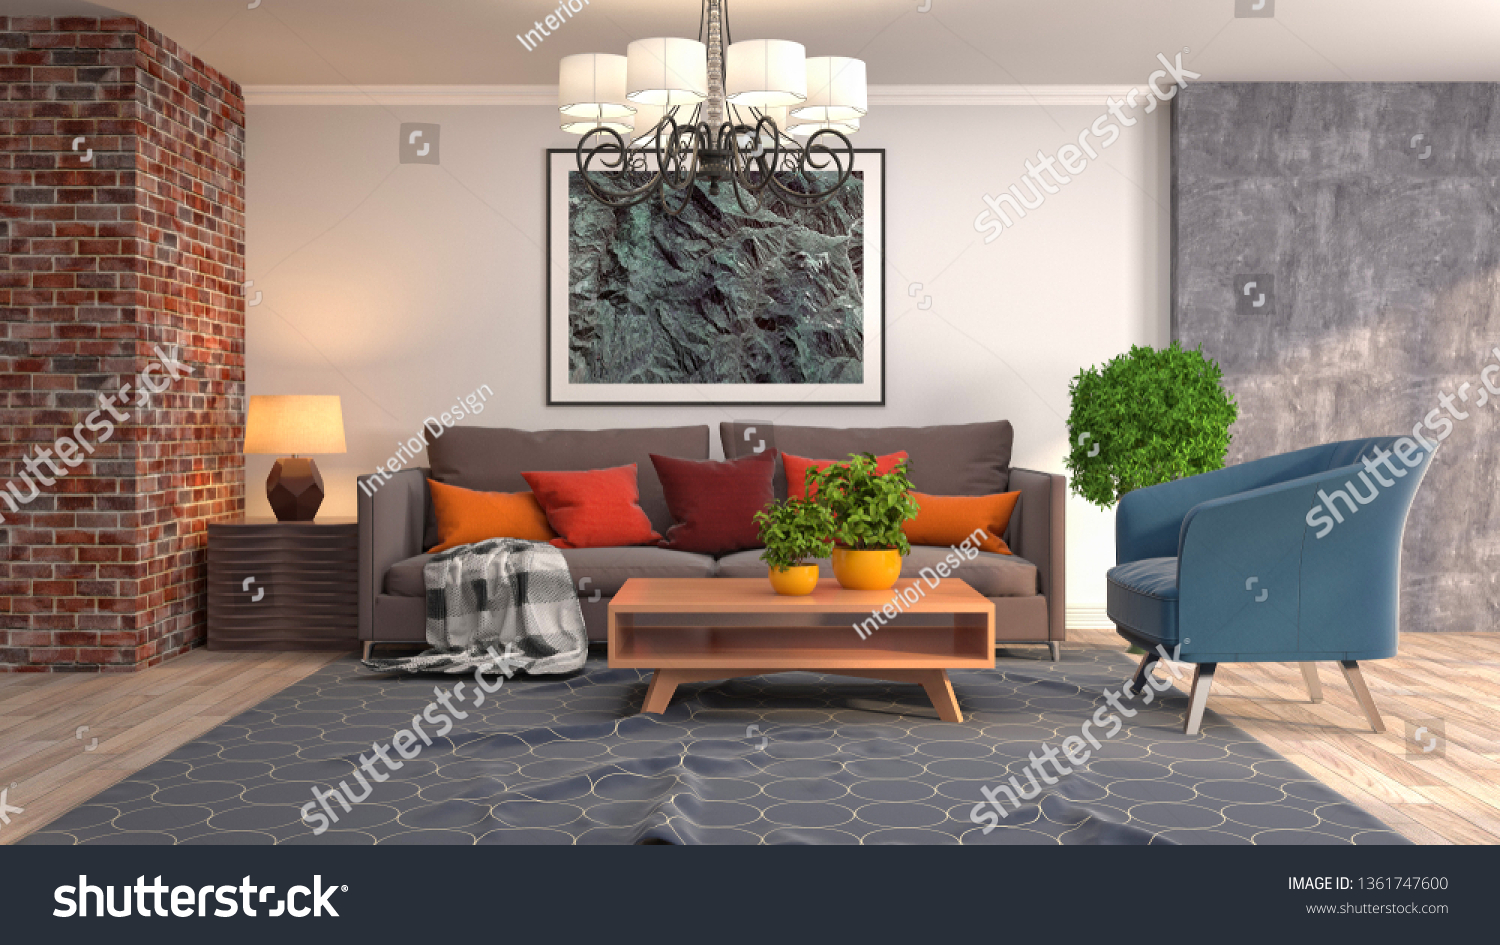 Interior of the living room. 3D illustration #1361747600